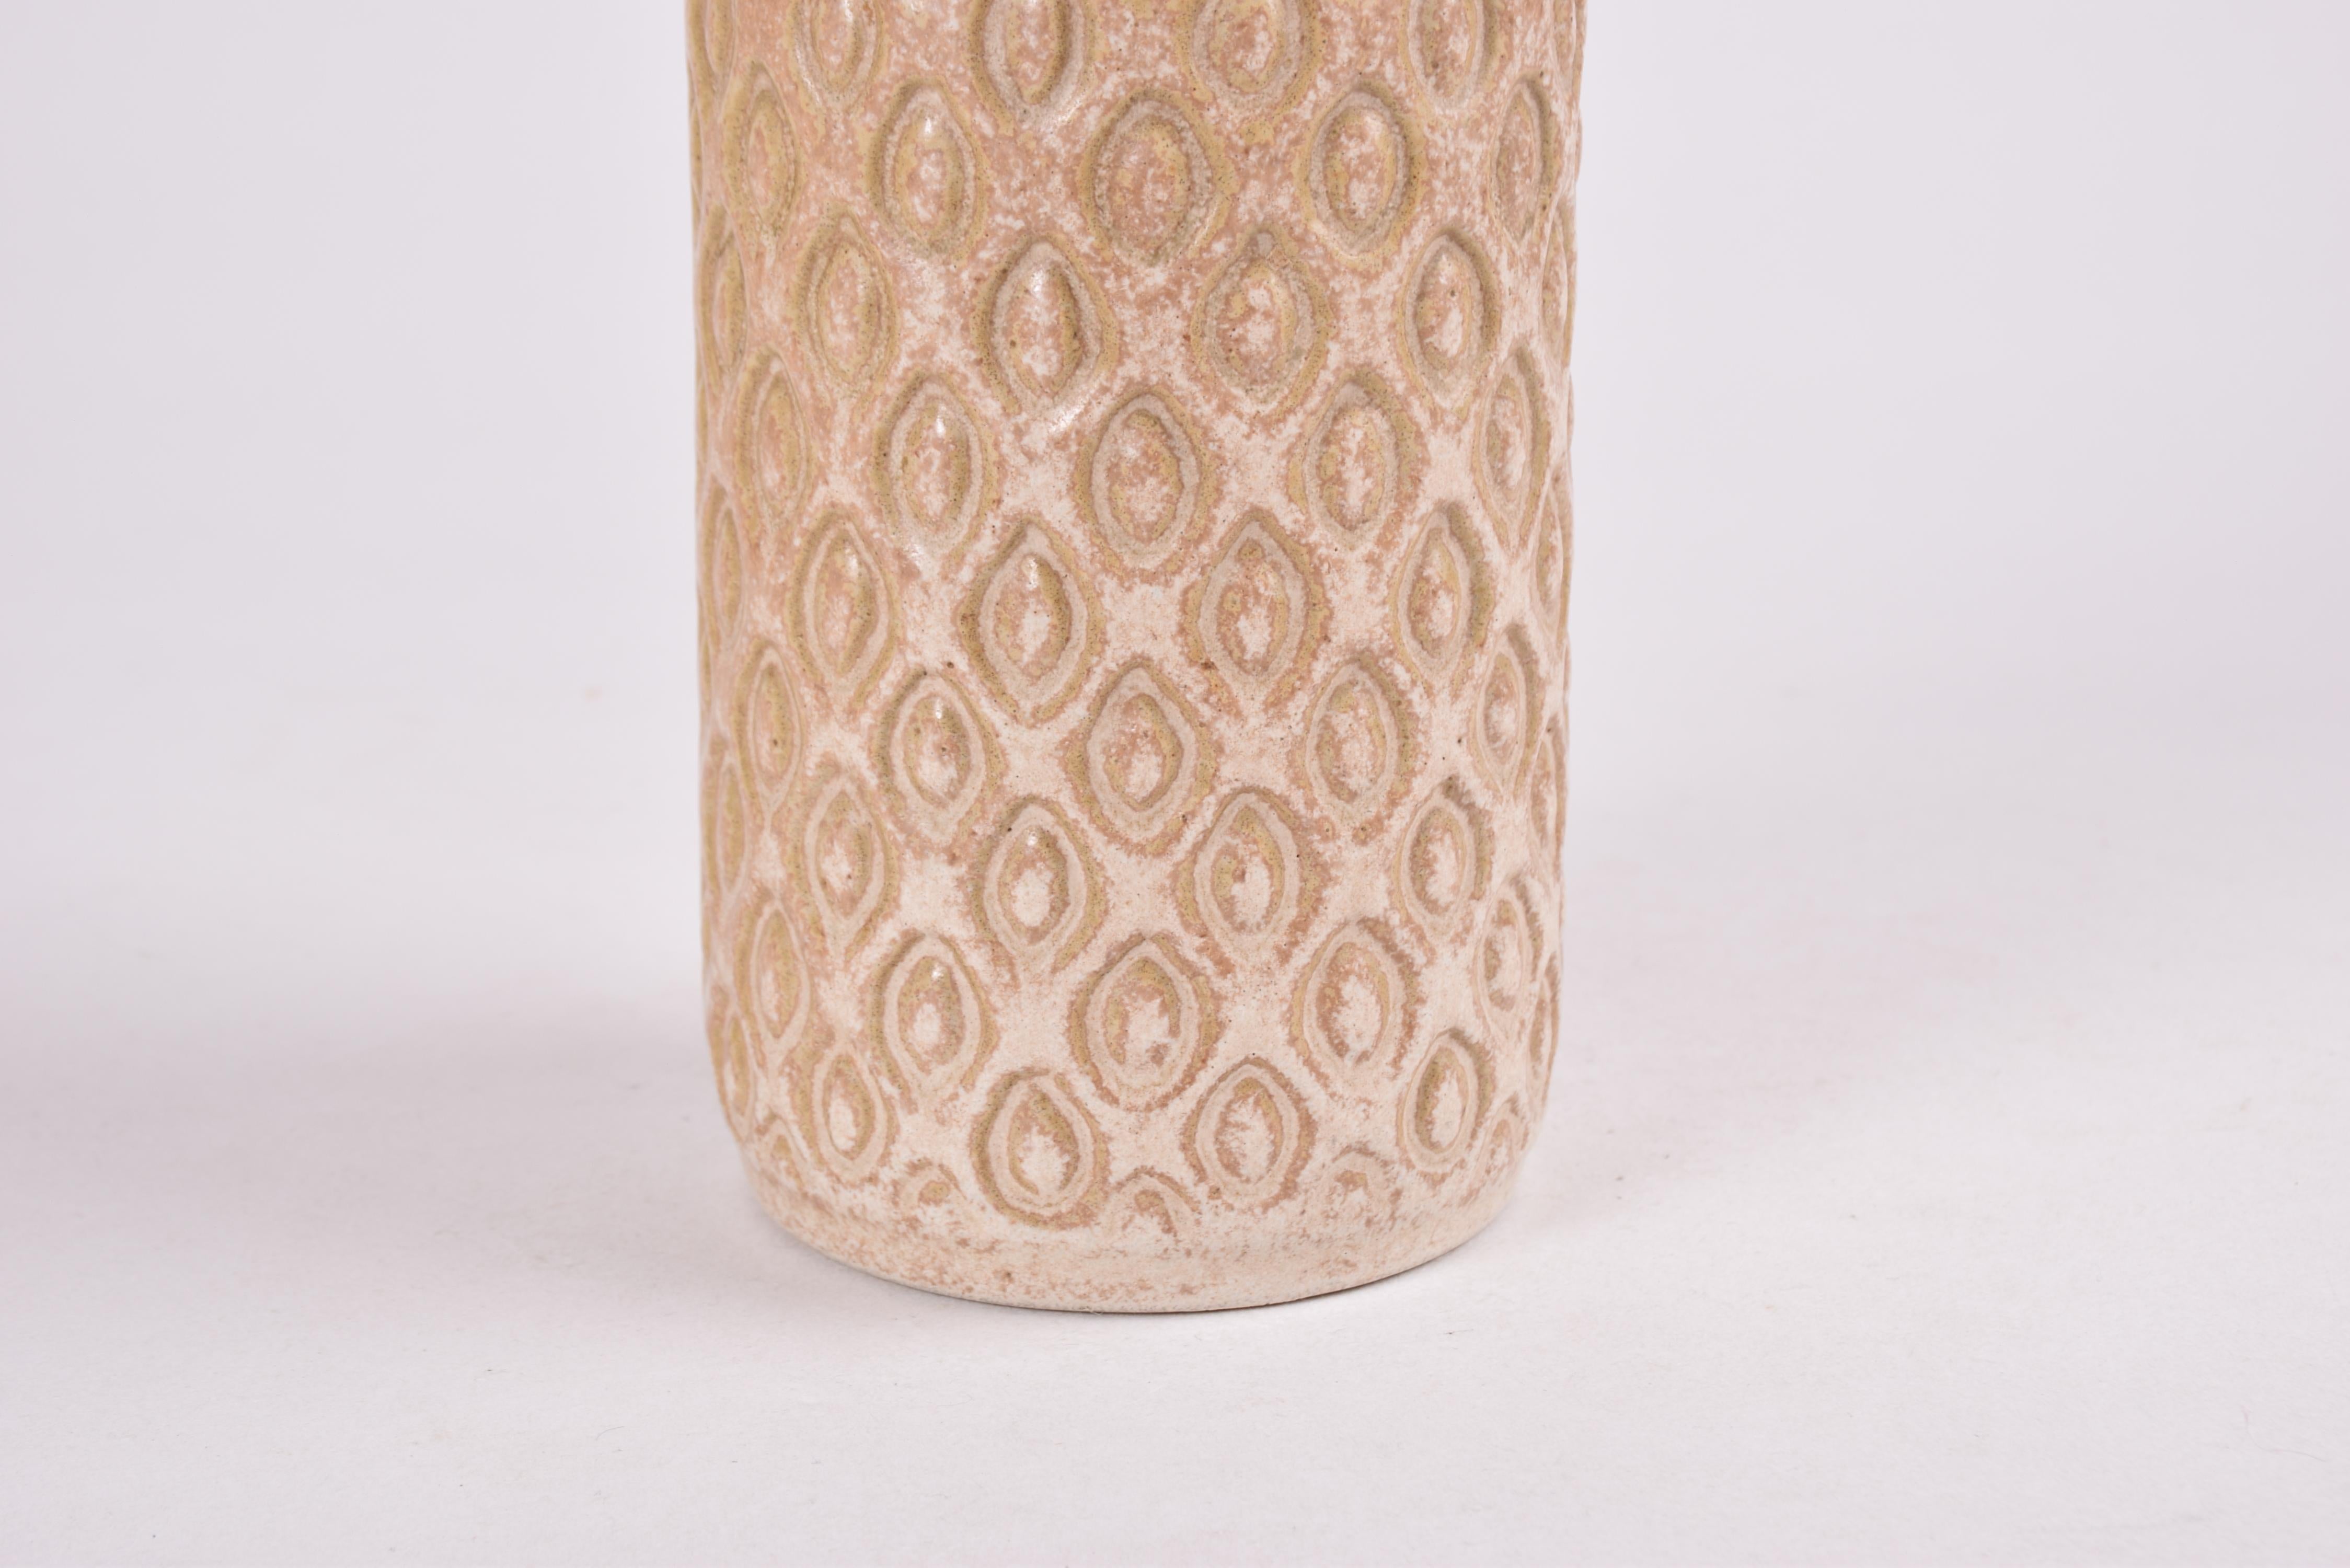 Danish Midcentury Beige Ceramic Vase Budding Style by Eva Sjögren for L. Hjorth In Good Condition For Sale In Aarhus C, DK